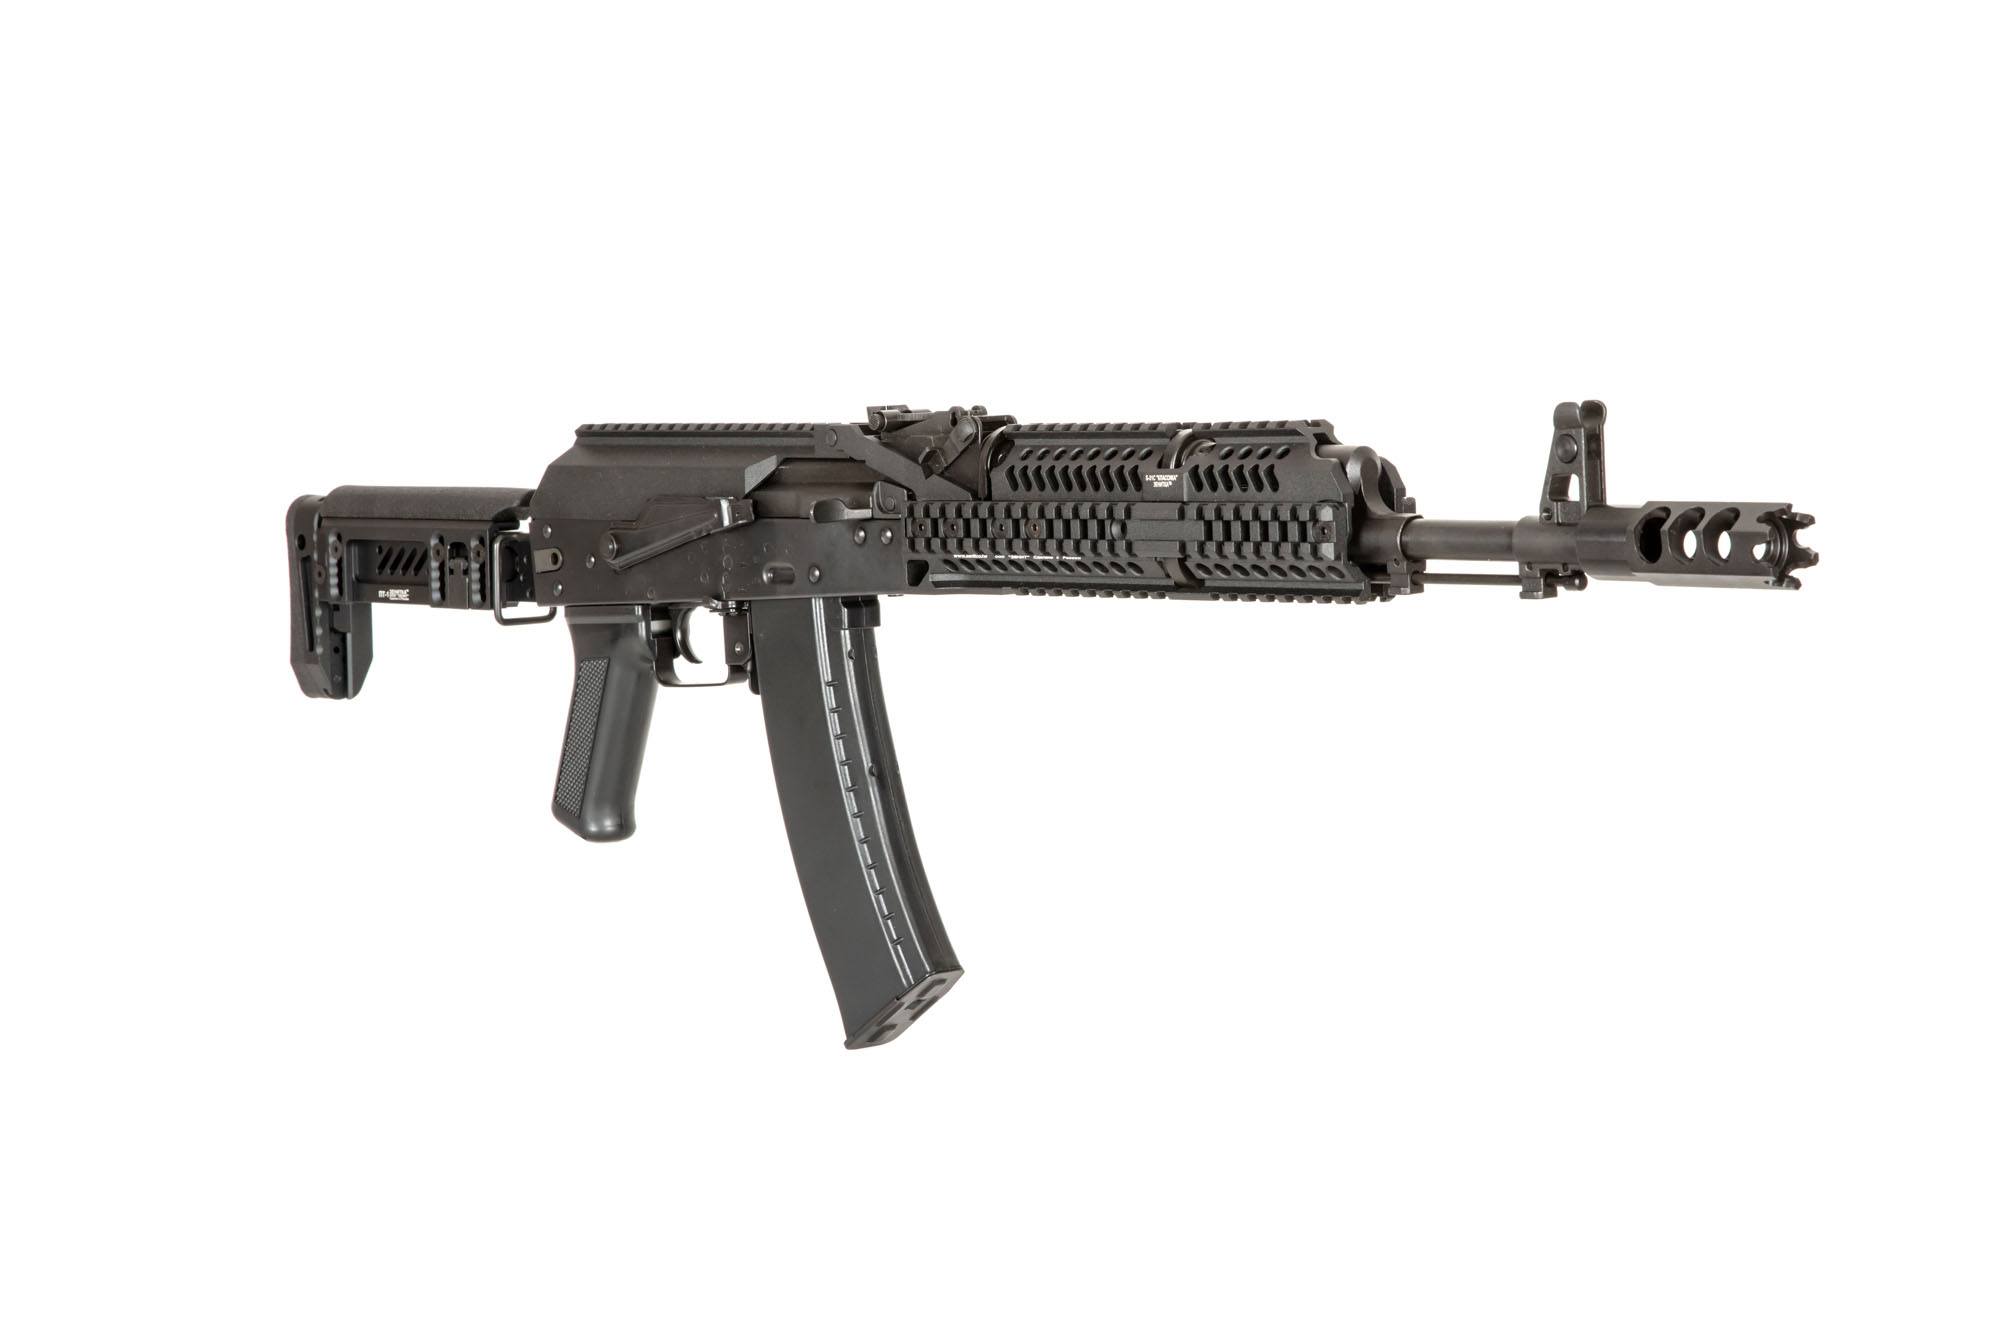 AKS-74M Karabiner Replik (ZKS-74M)